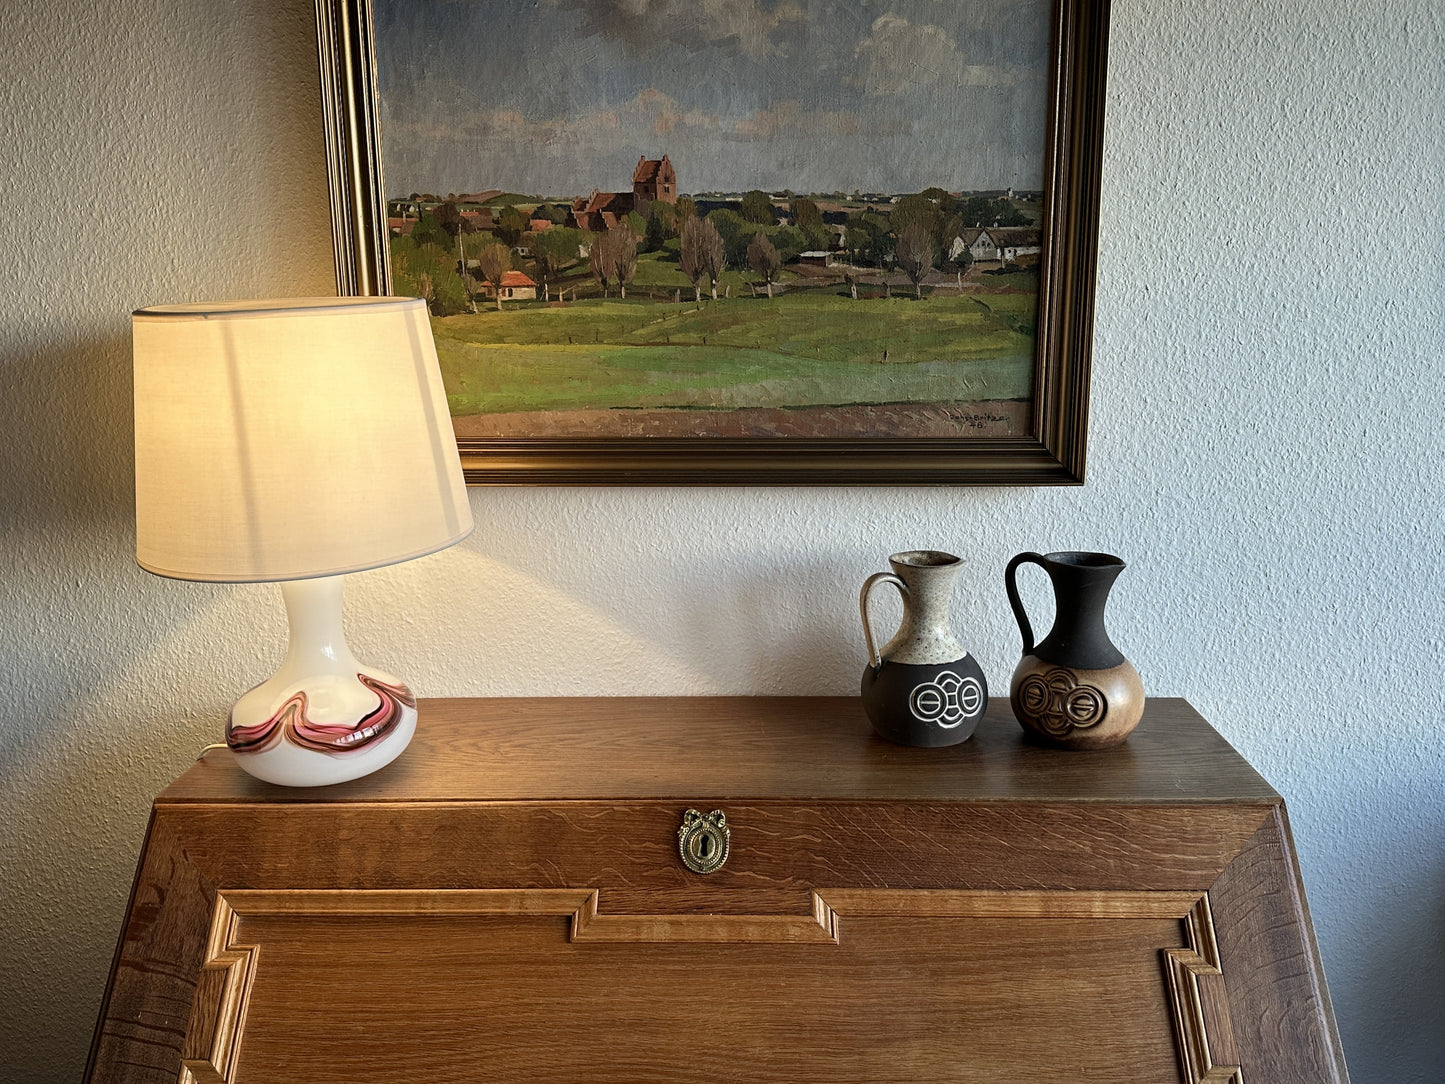 Holmegaard - Table lamp - Opal white/pink - 33cm Scandinapan